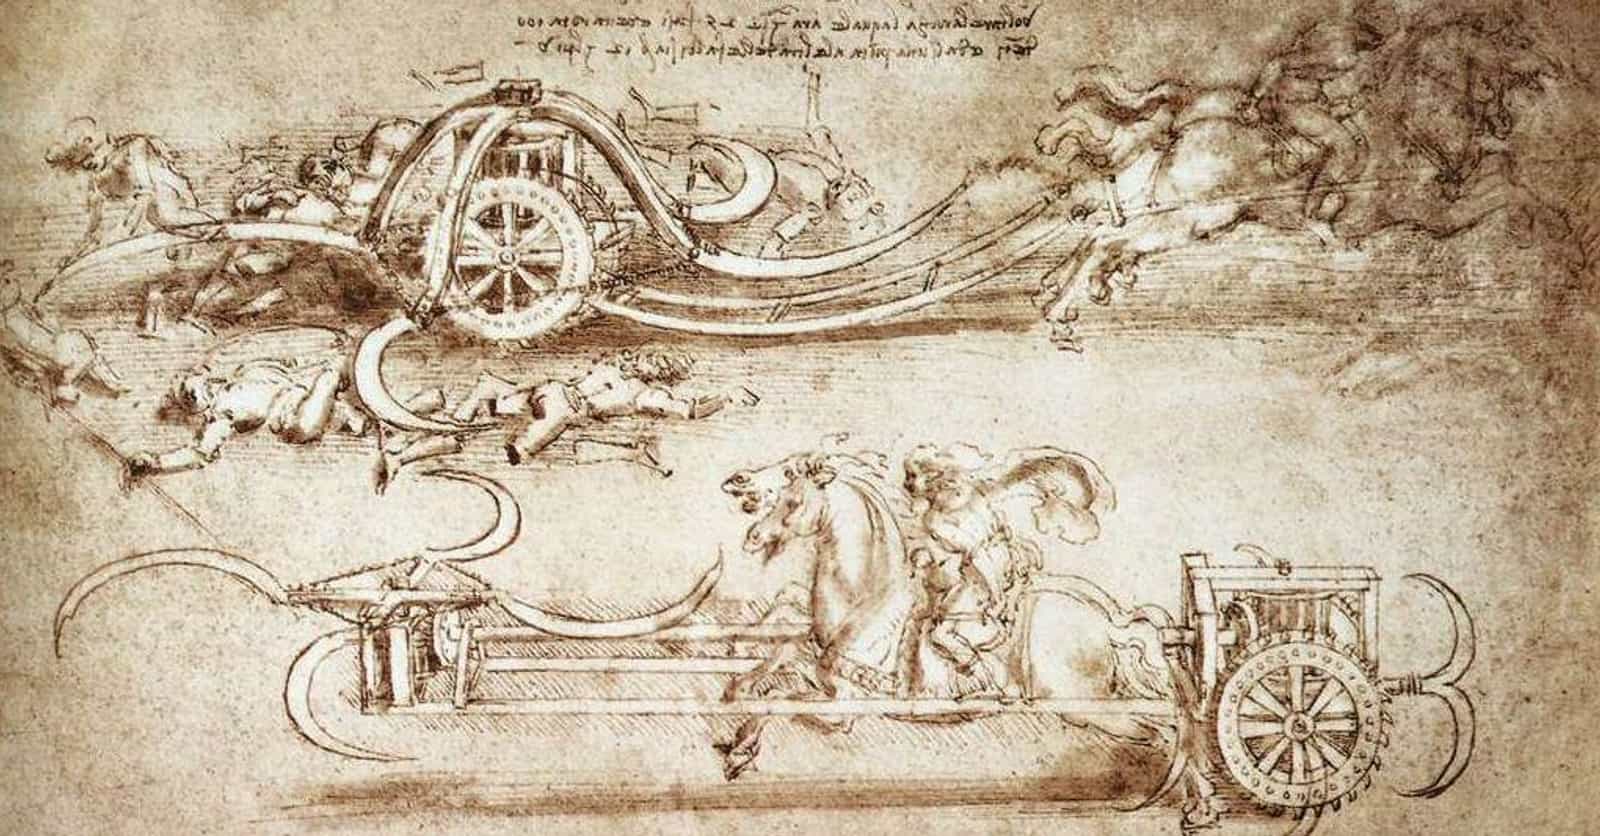 The Craziest Weapons Of War Leonardo Da Vinci Ever Invented